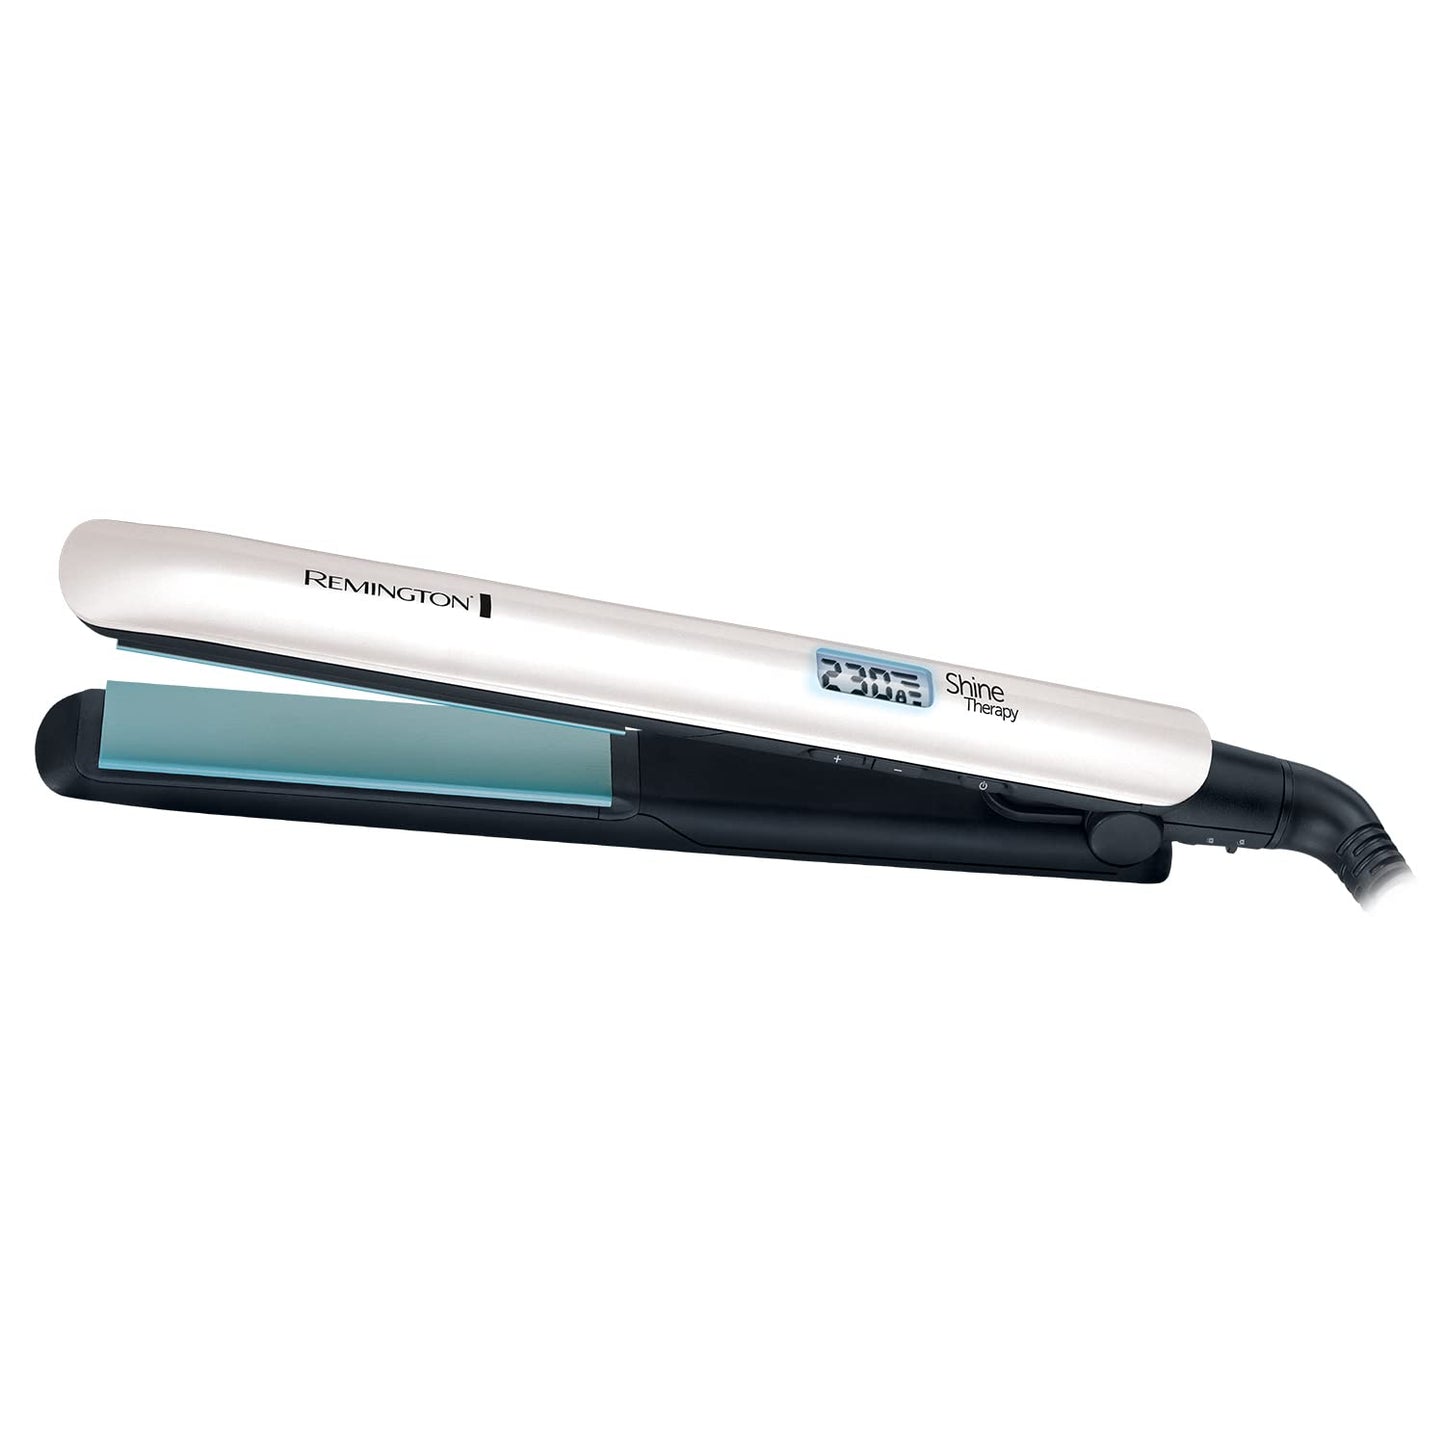 Remington Hair Straightener Shine Therapy - S8500 - Highfy.pk